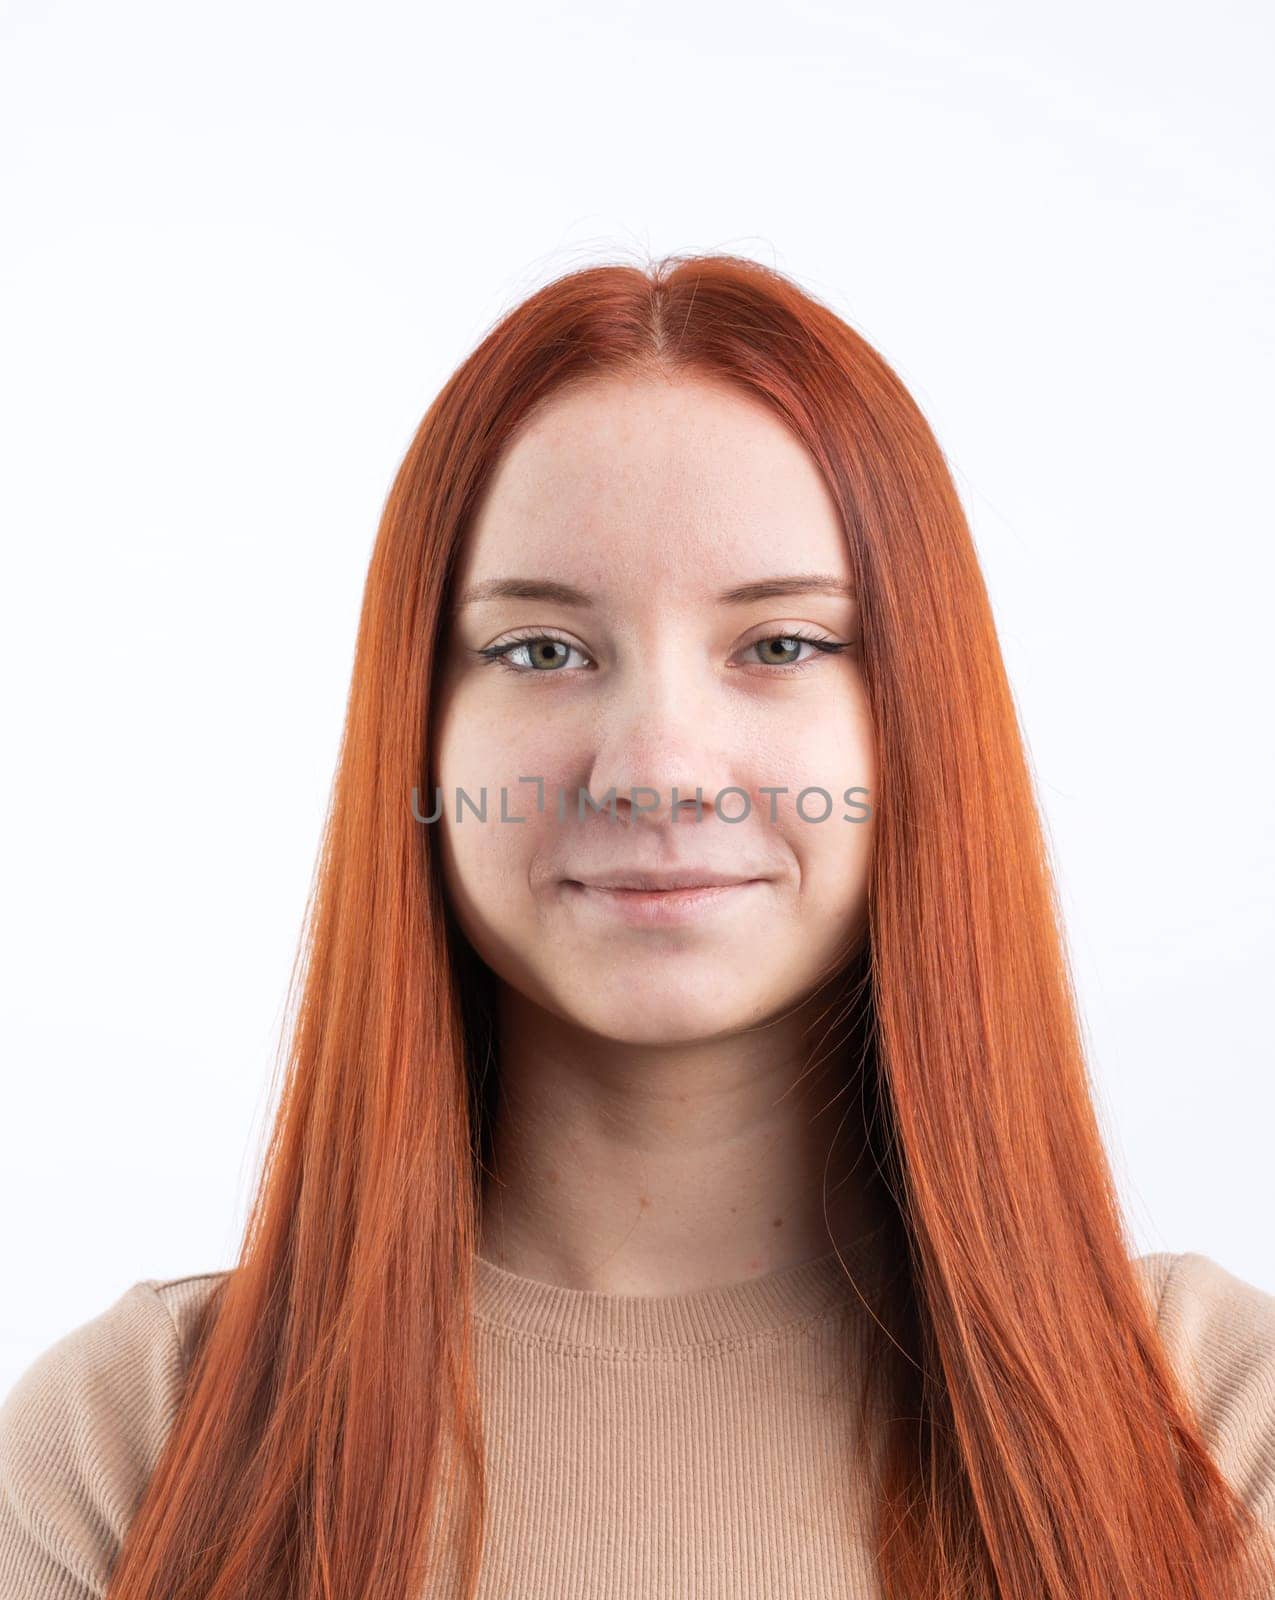 Biometric Passport photo of attractive female, natural look healthy skin by Desperada